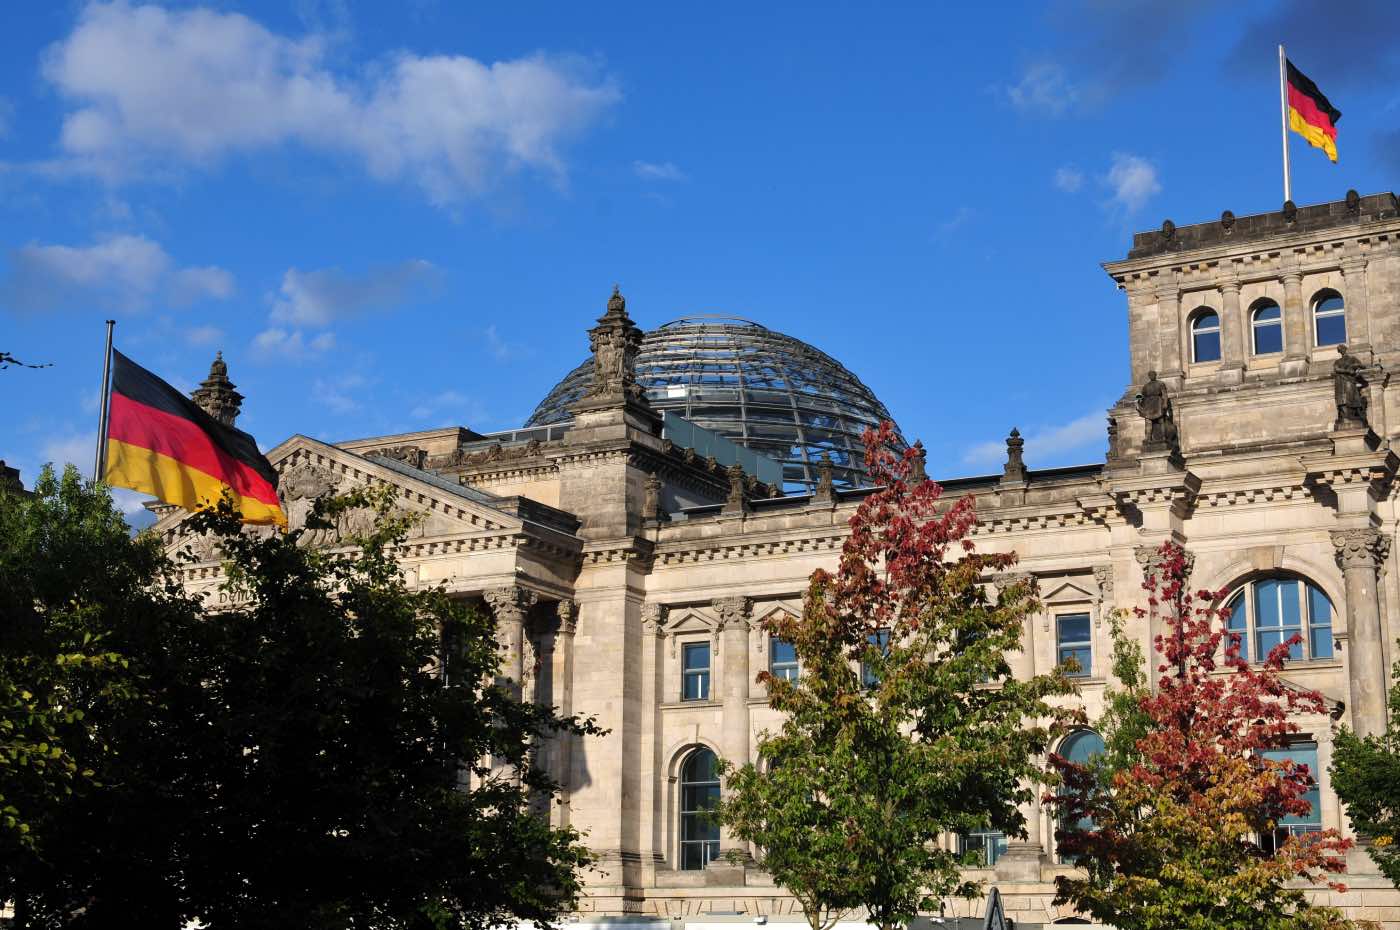 Cúpula del Reichstag de Berlín, de Norman Foster, arquitectos famosos